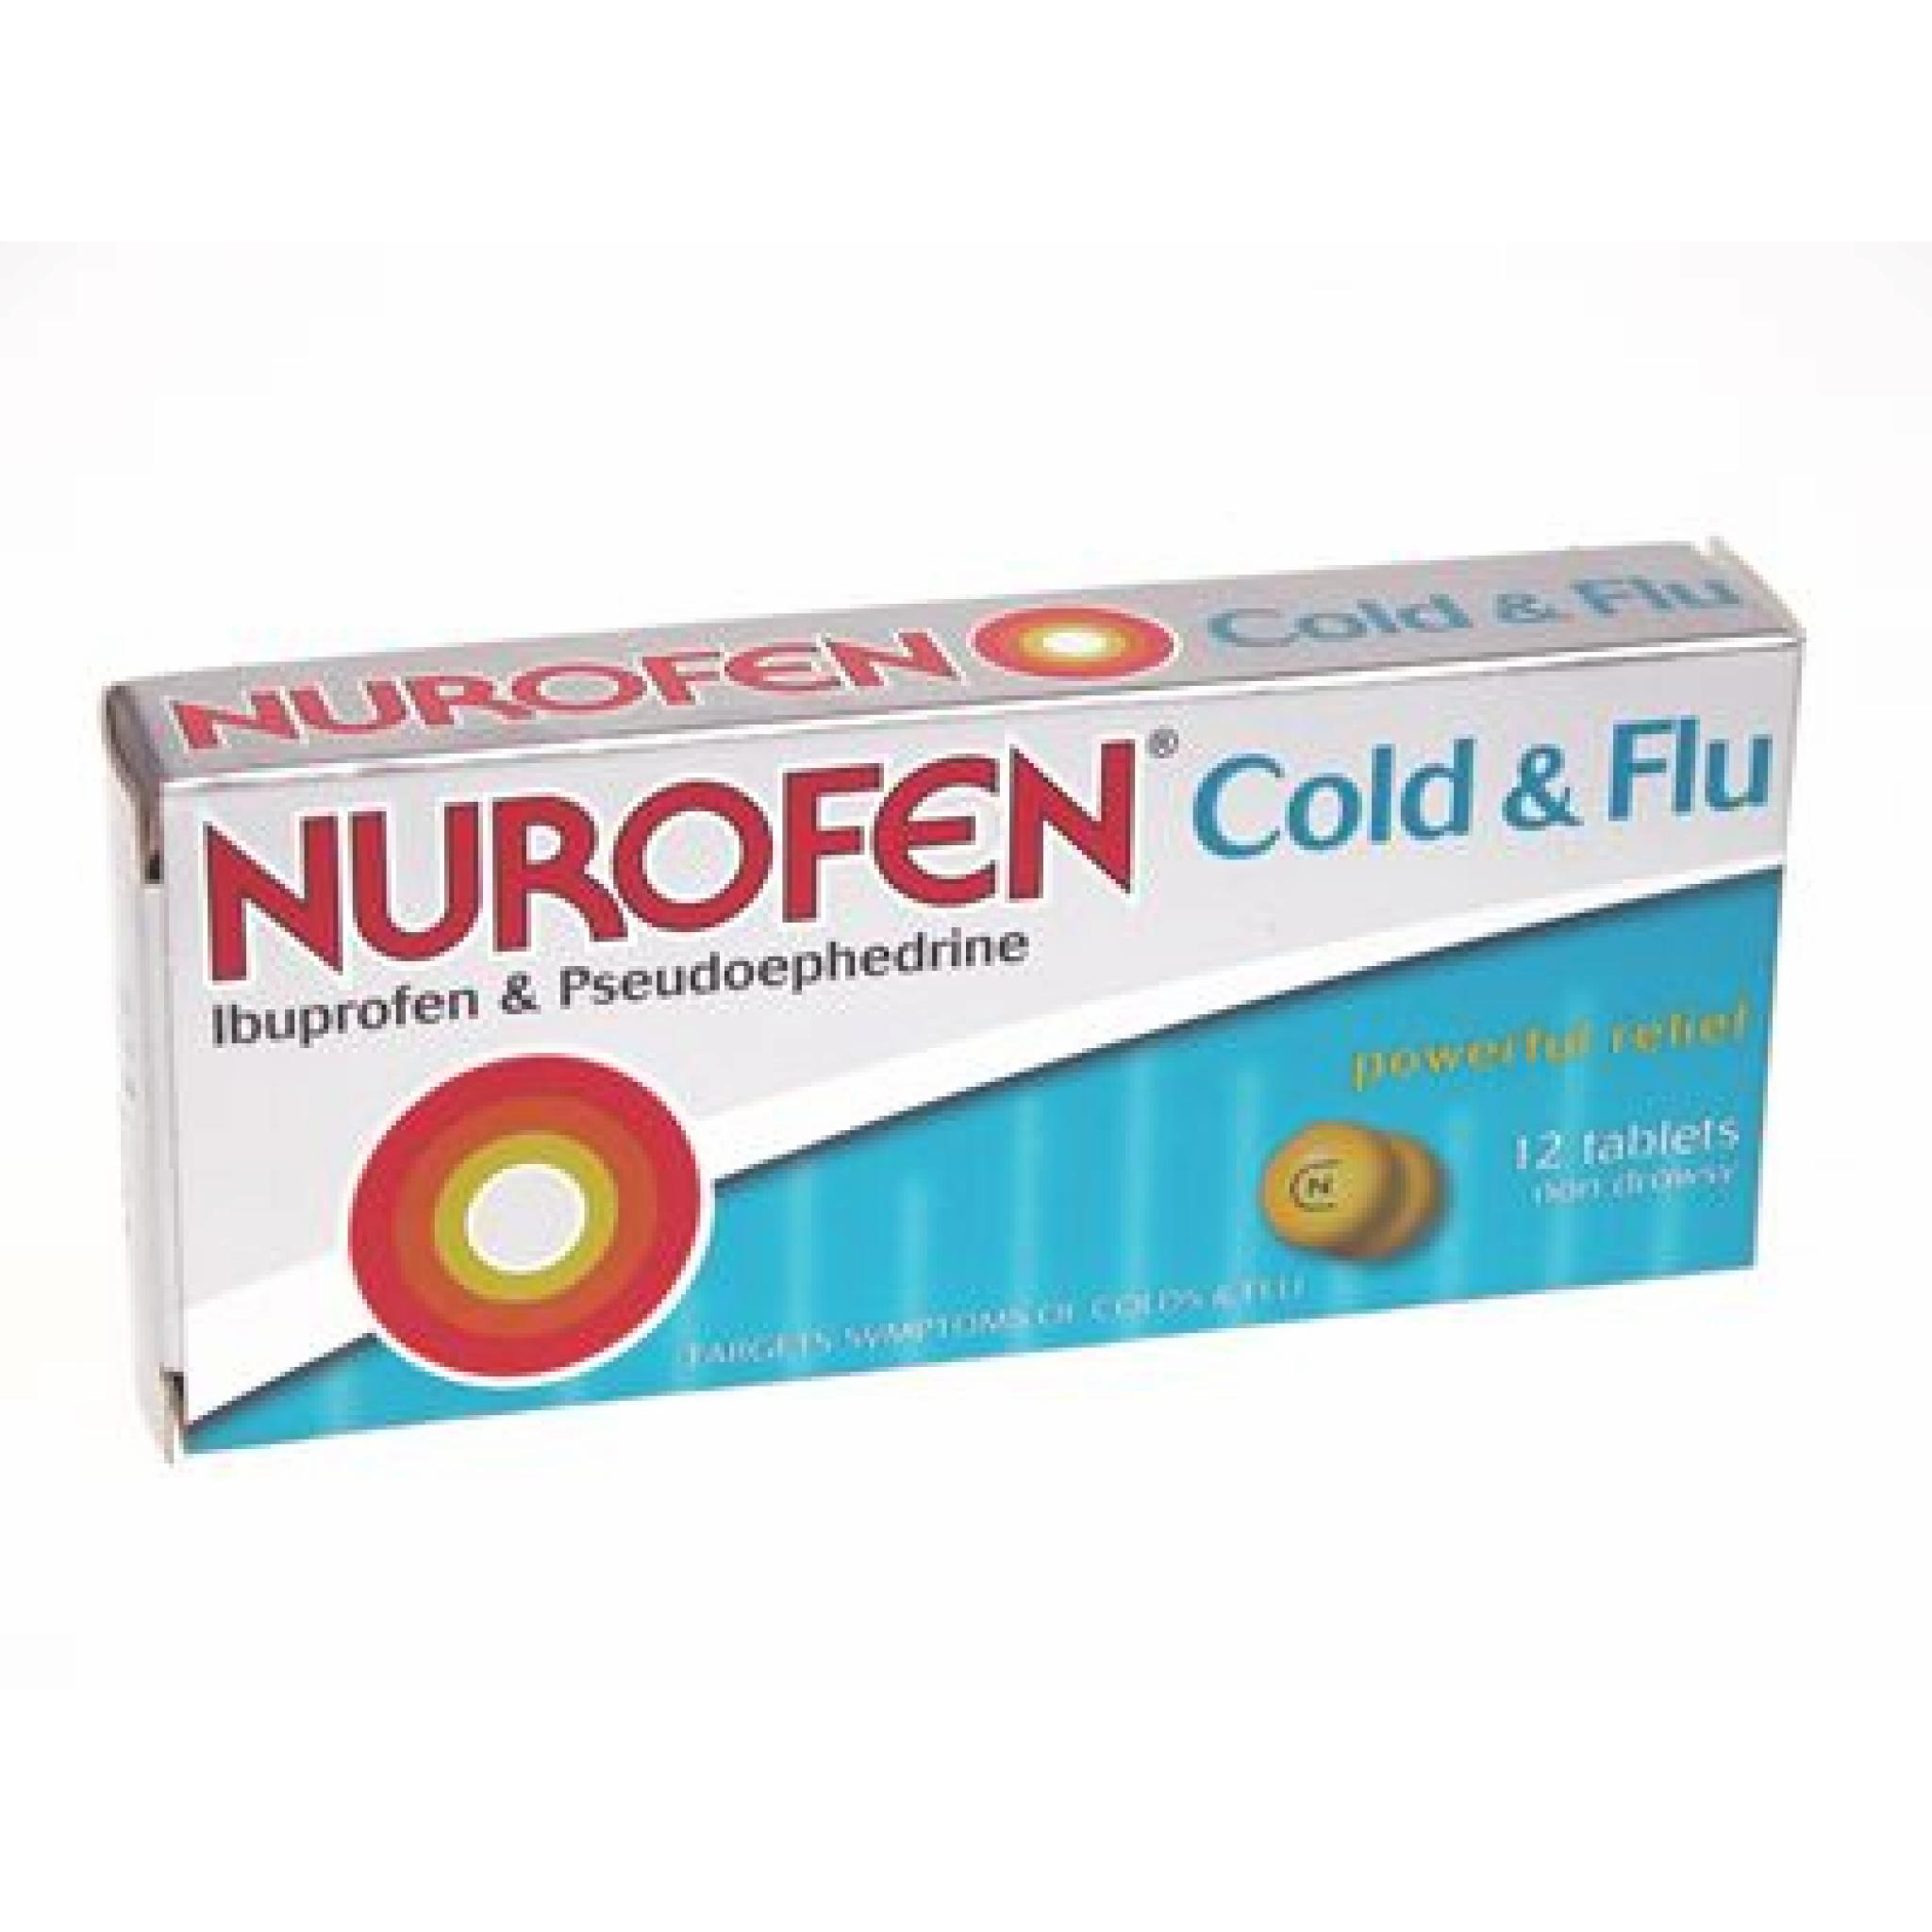 Nurofen cold & flu tablets